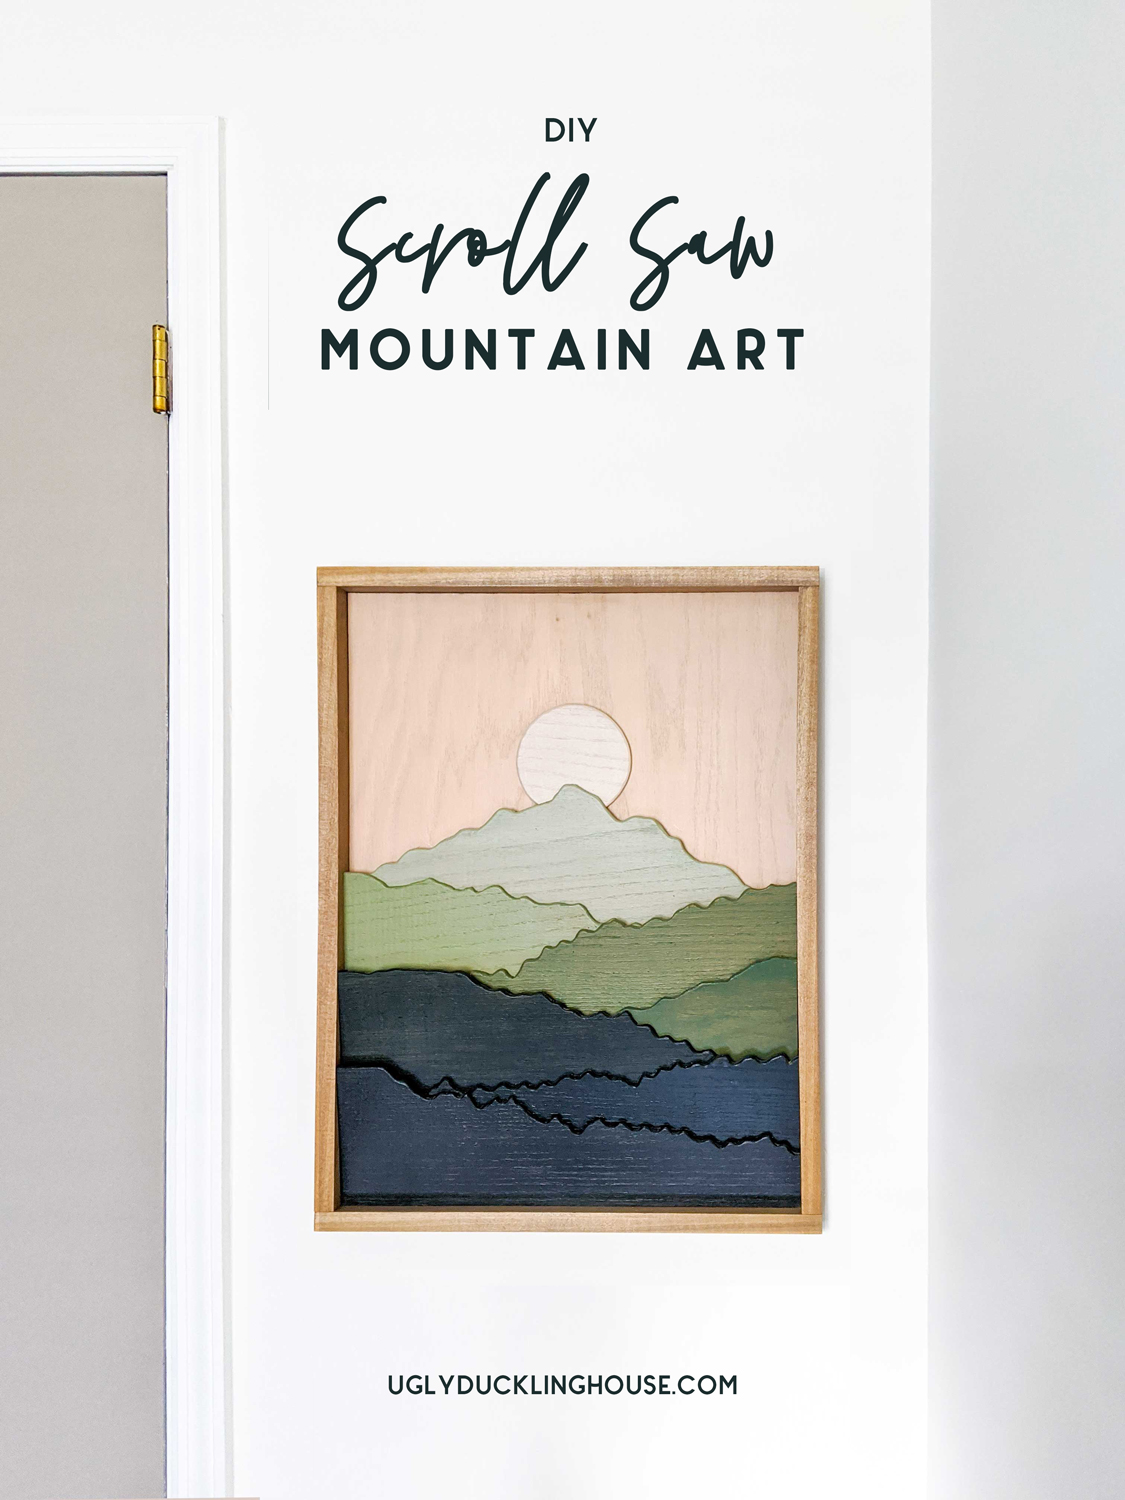 DIY Scroll mountain art reveal